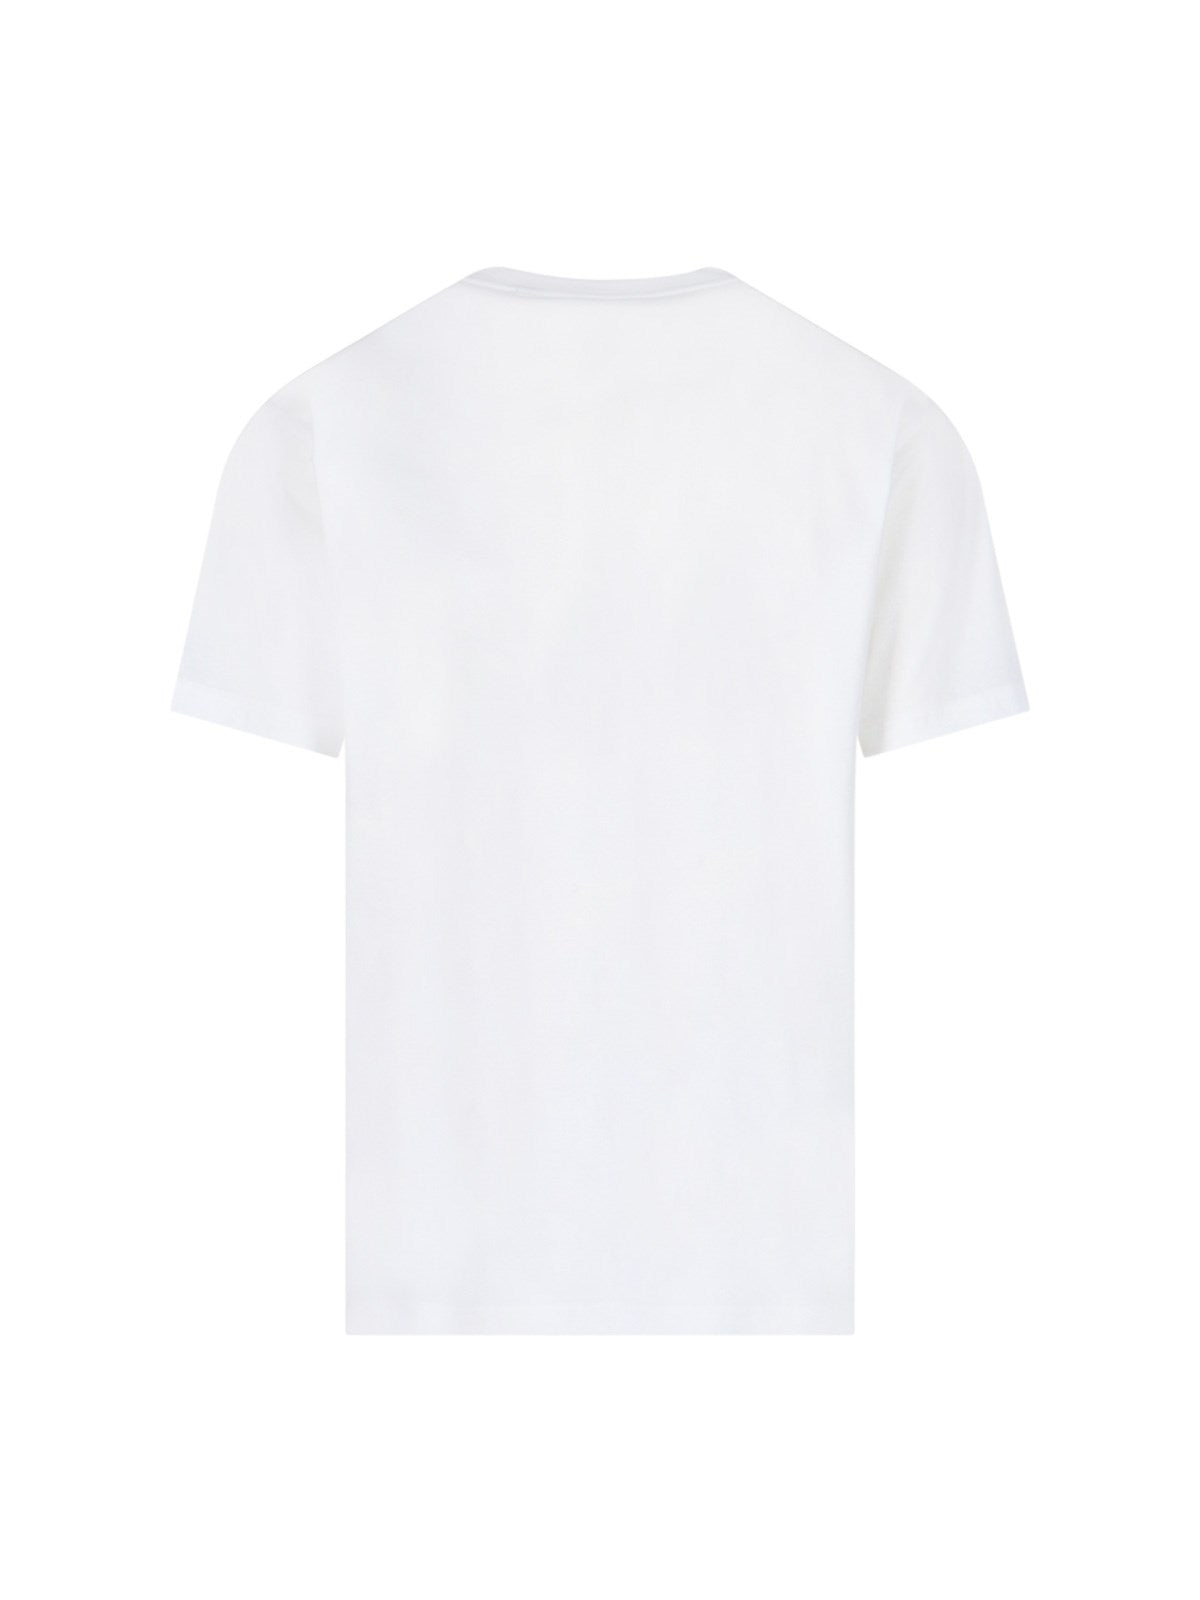 burberry t-shirt oversize logo-Burberry- t-shirt Dresso